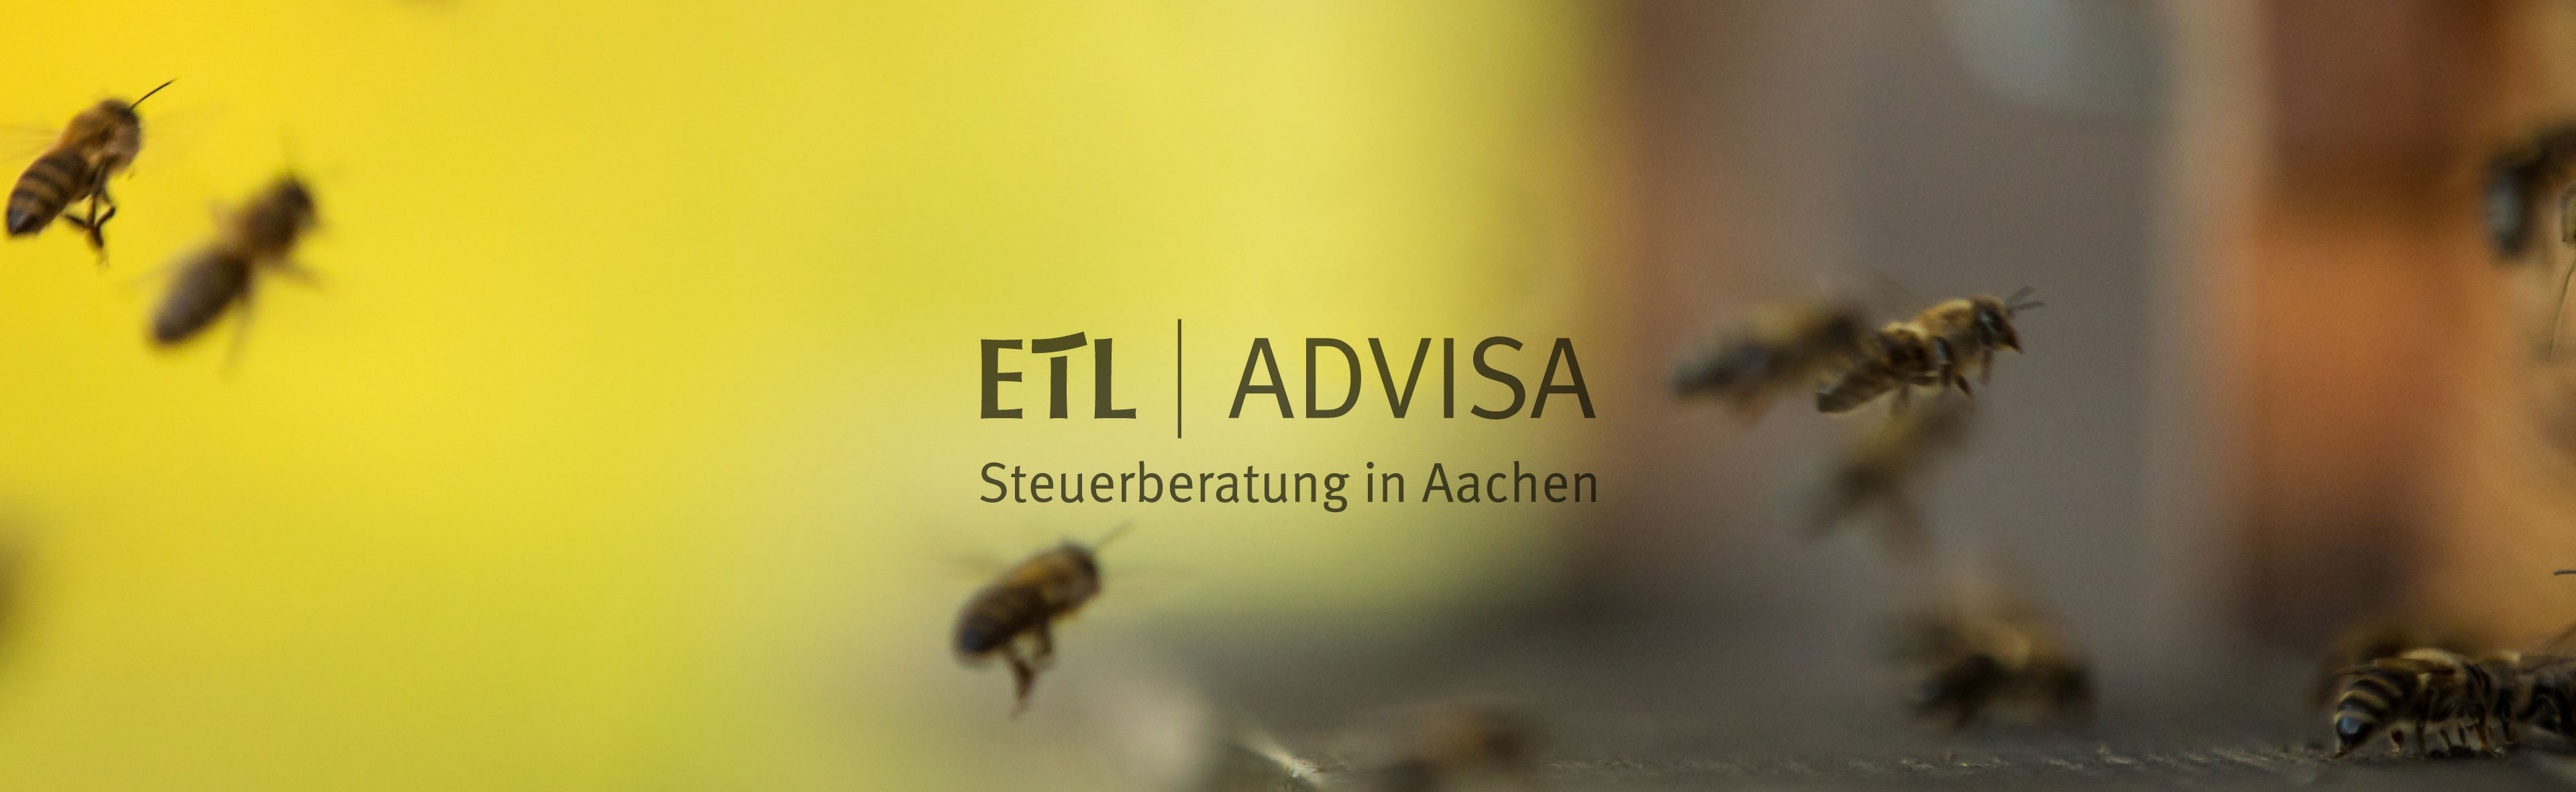 Bienenpatenschaft ADVISA Aachen